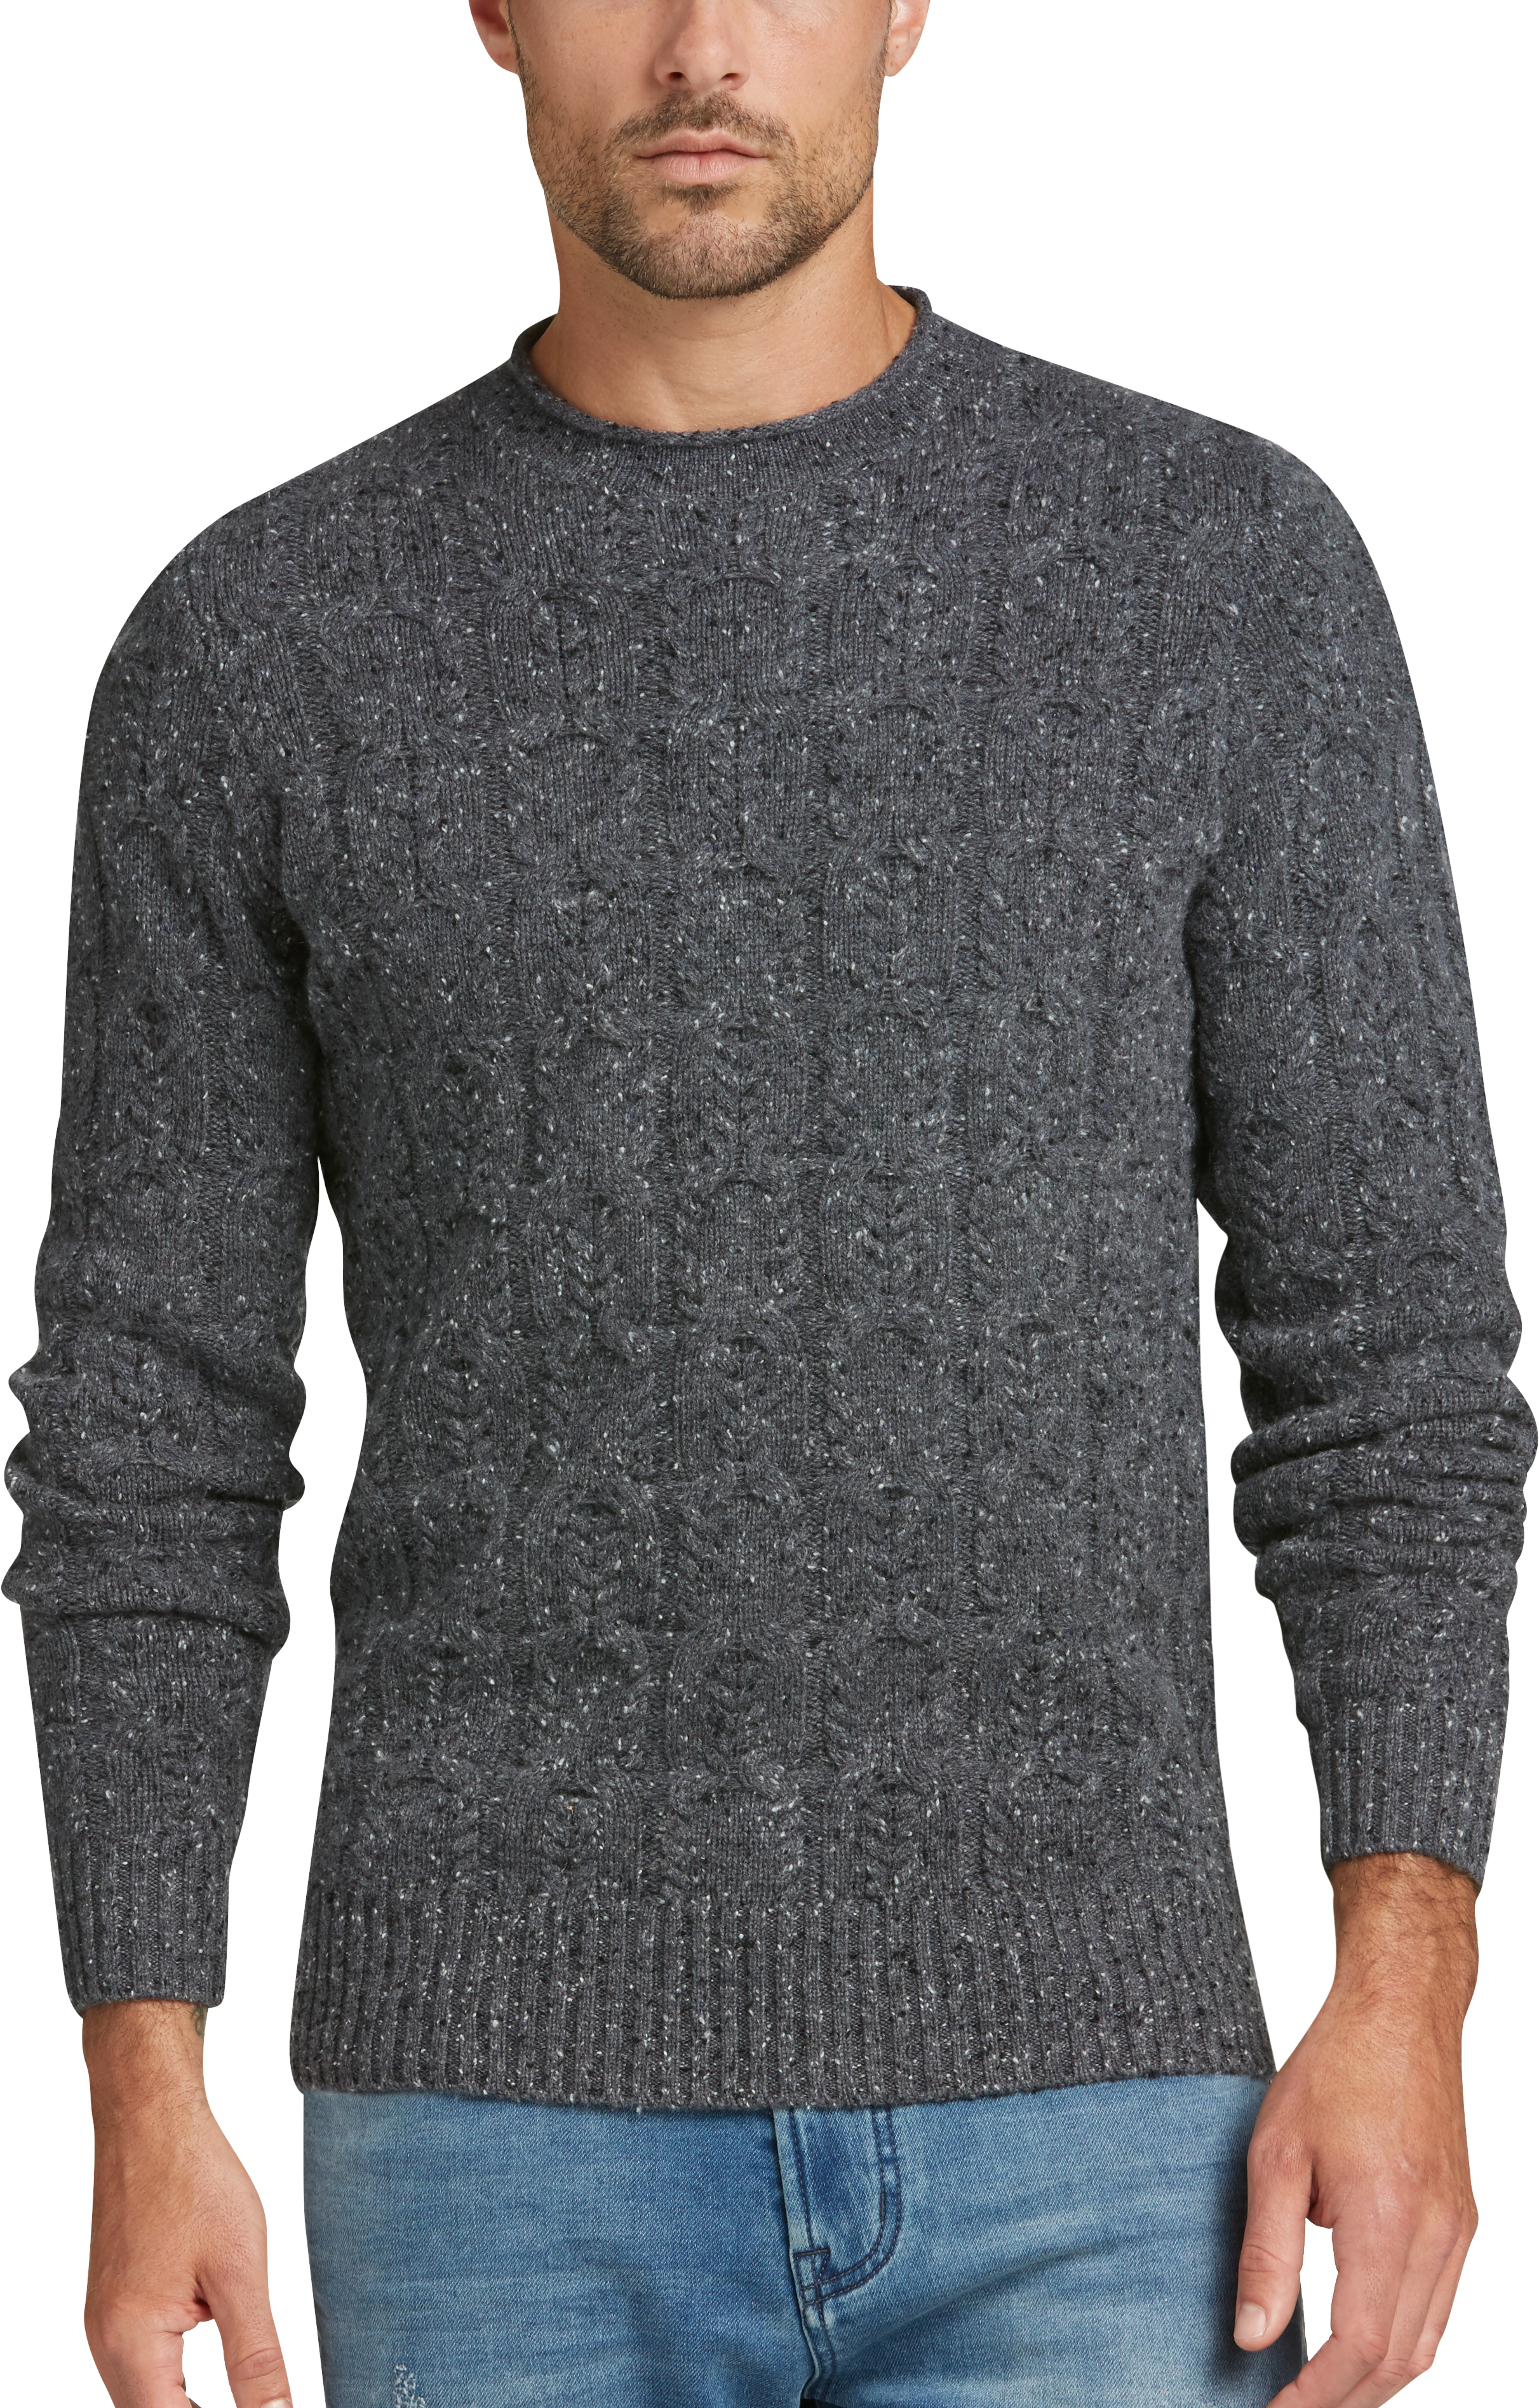 Joseph Abboud Charcoal Cashmere-Blend Cableknit Sweater - Men's Modern ...